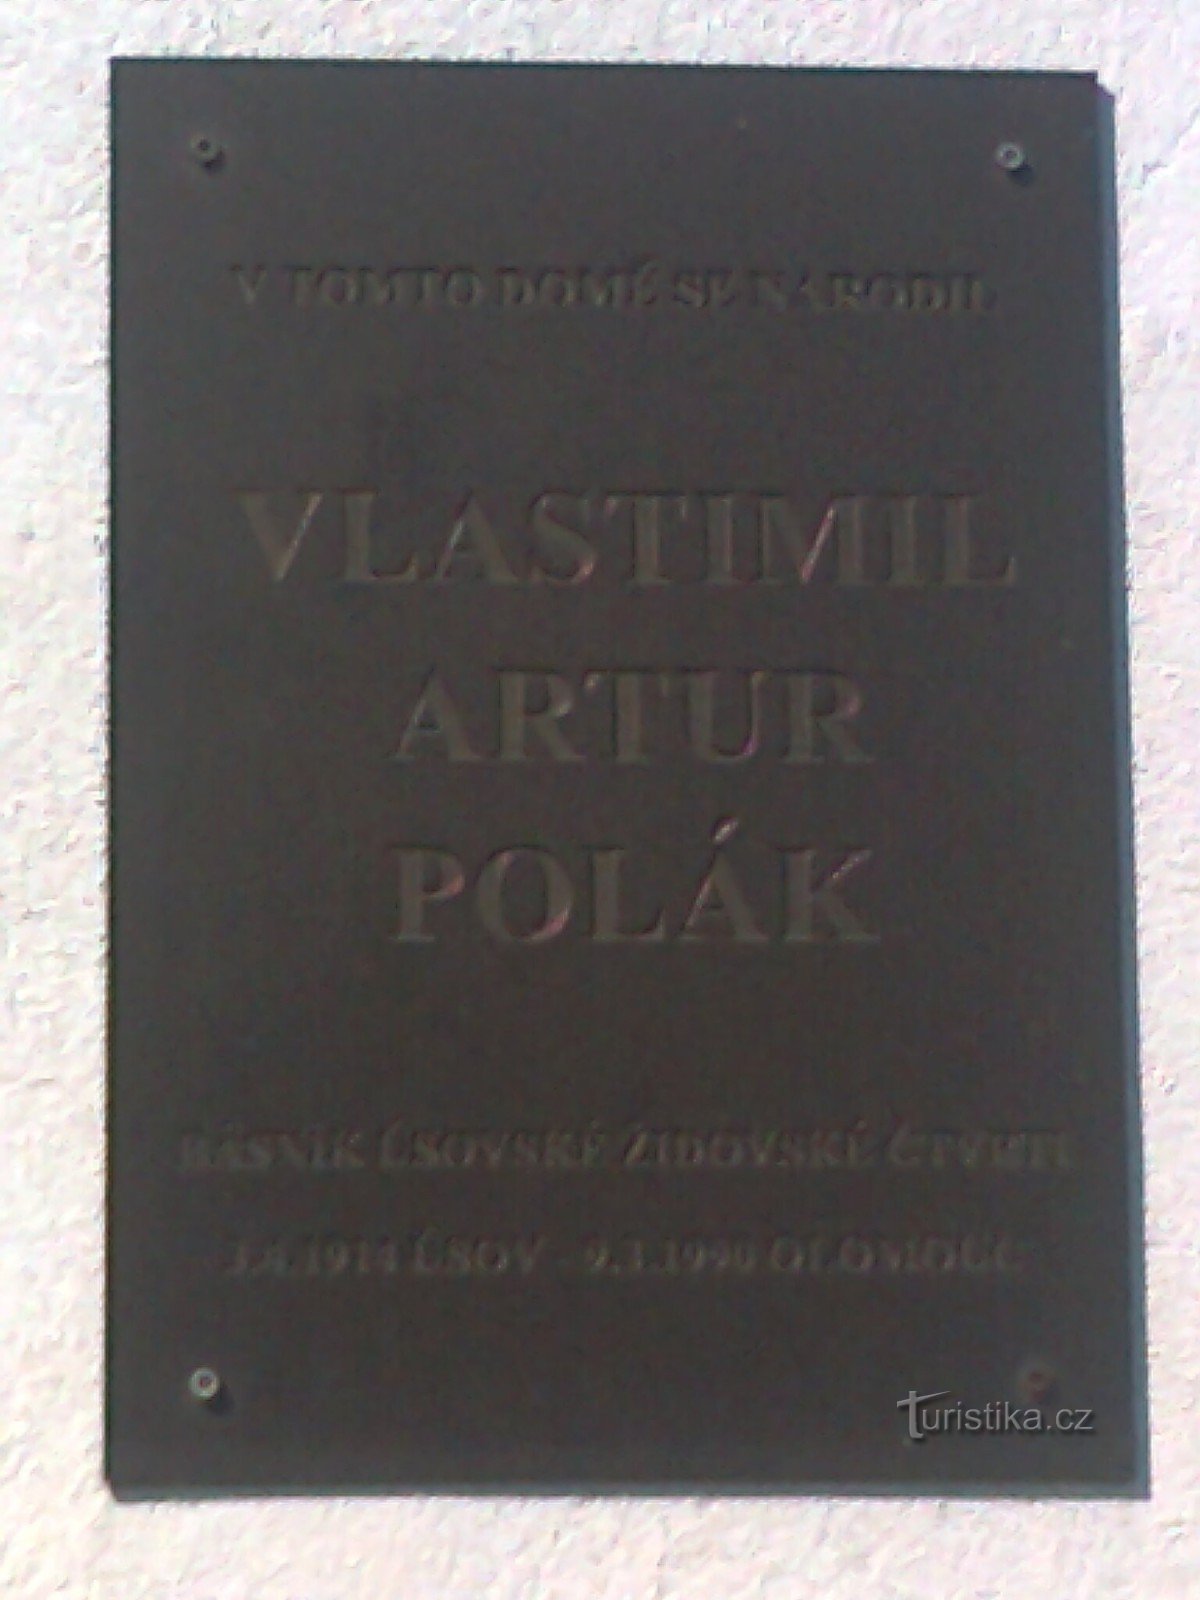 Úsov - o local de nascimento do poeta e romancista Vlastimil Artur Polák